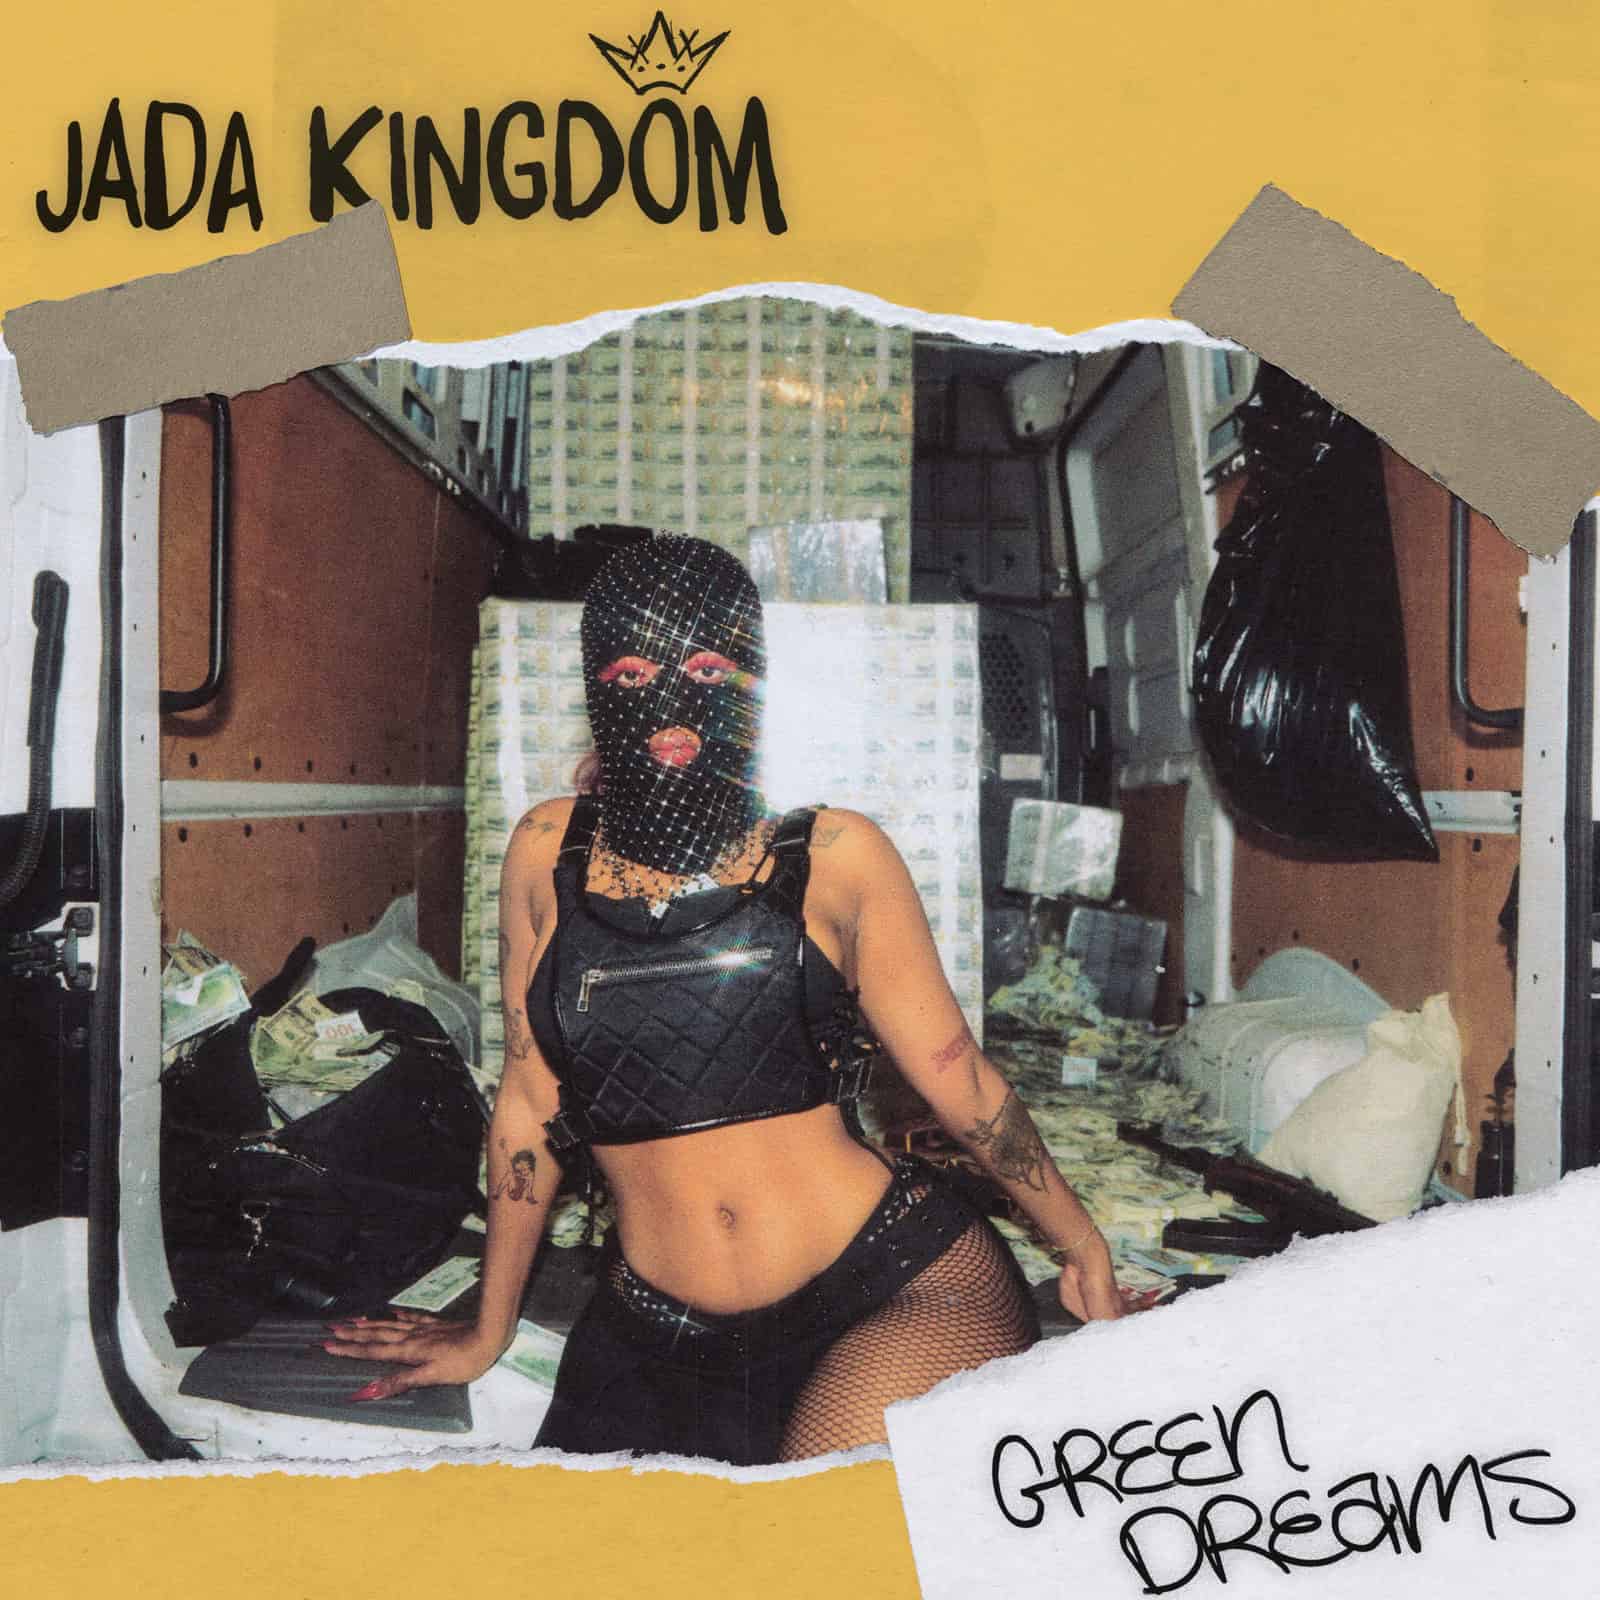 Jada Kingdom - Green Dreams